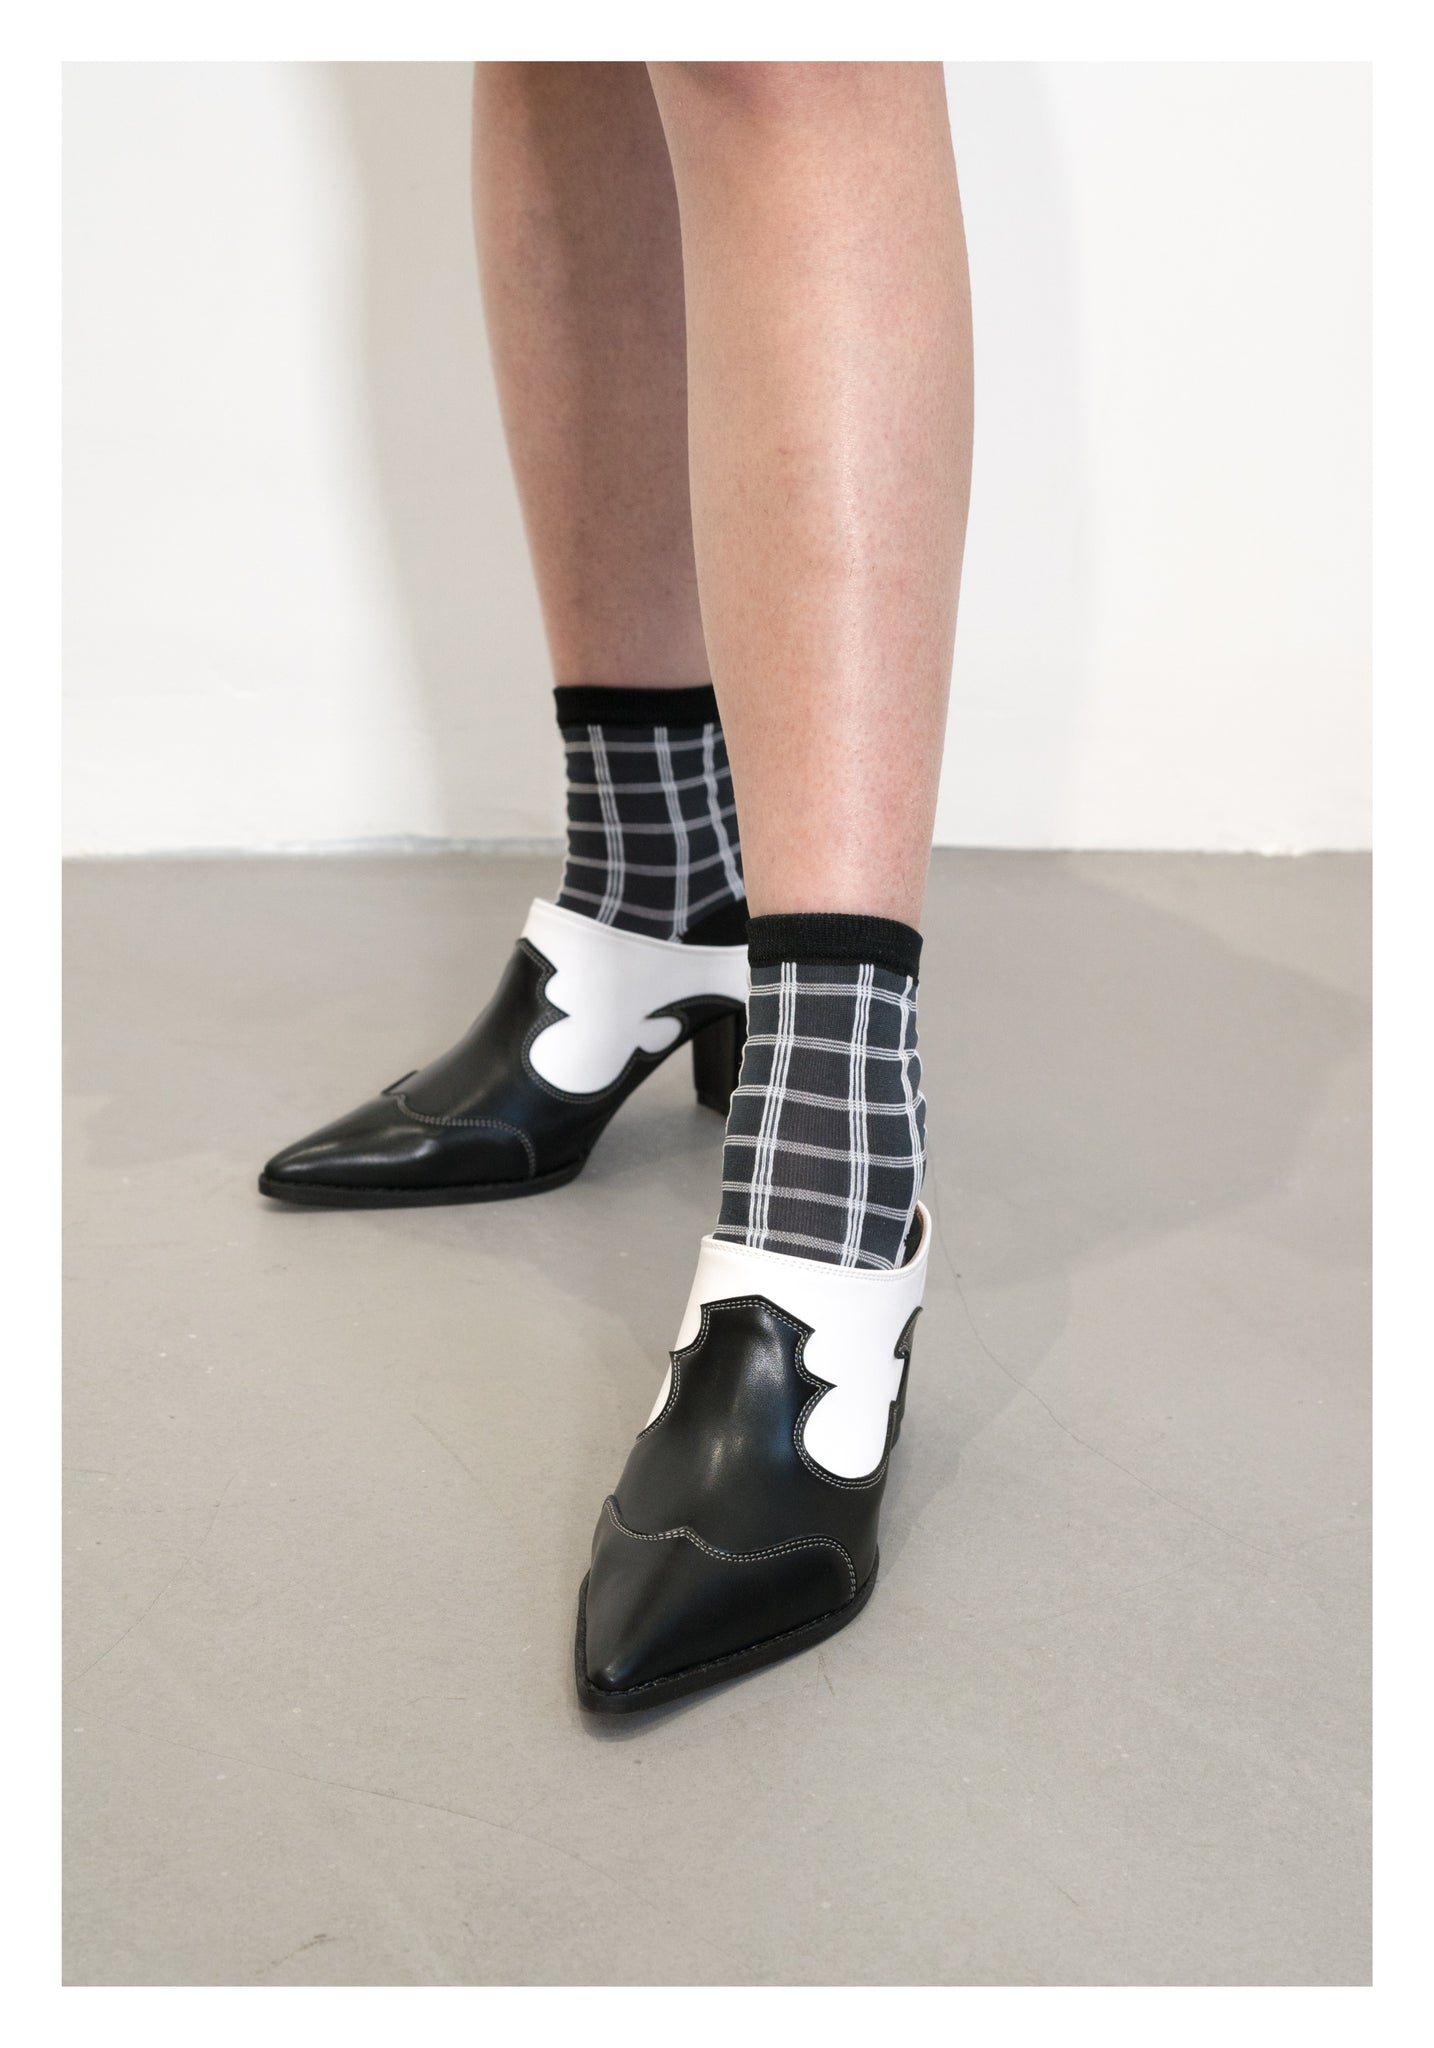 Triple Line Checker Socks - whoami